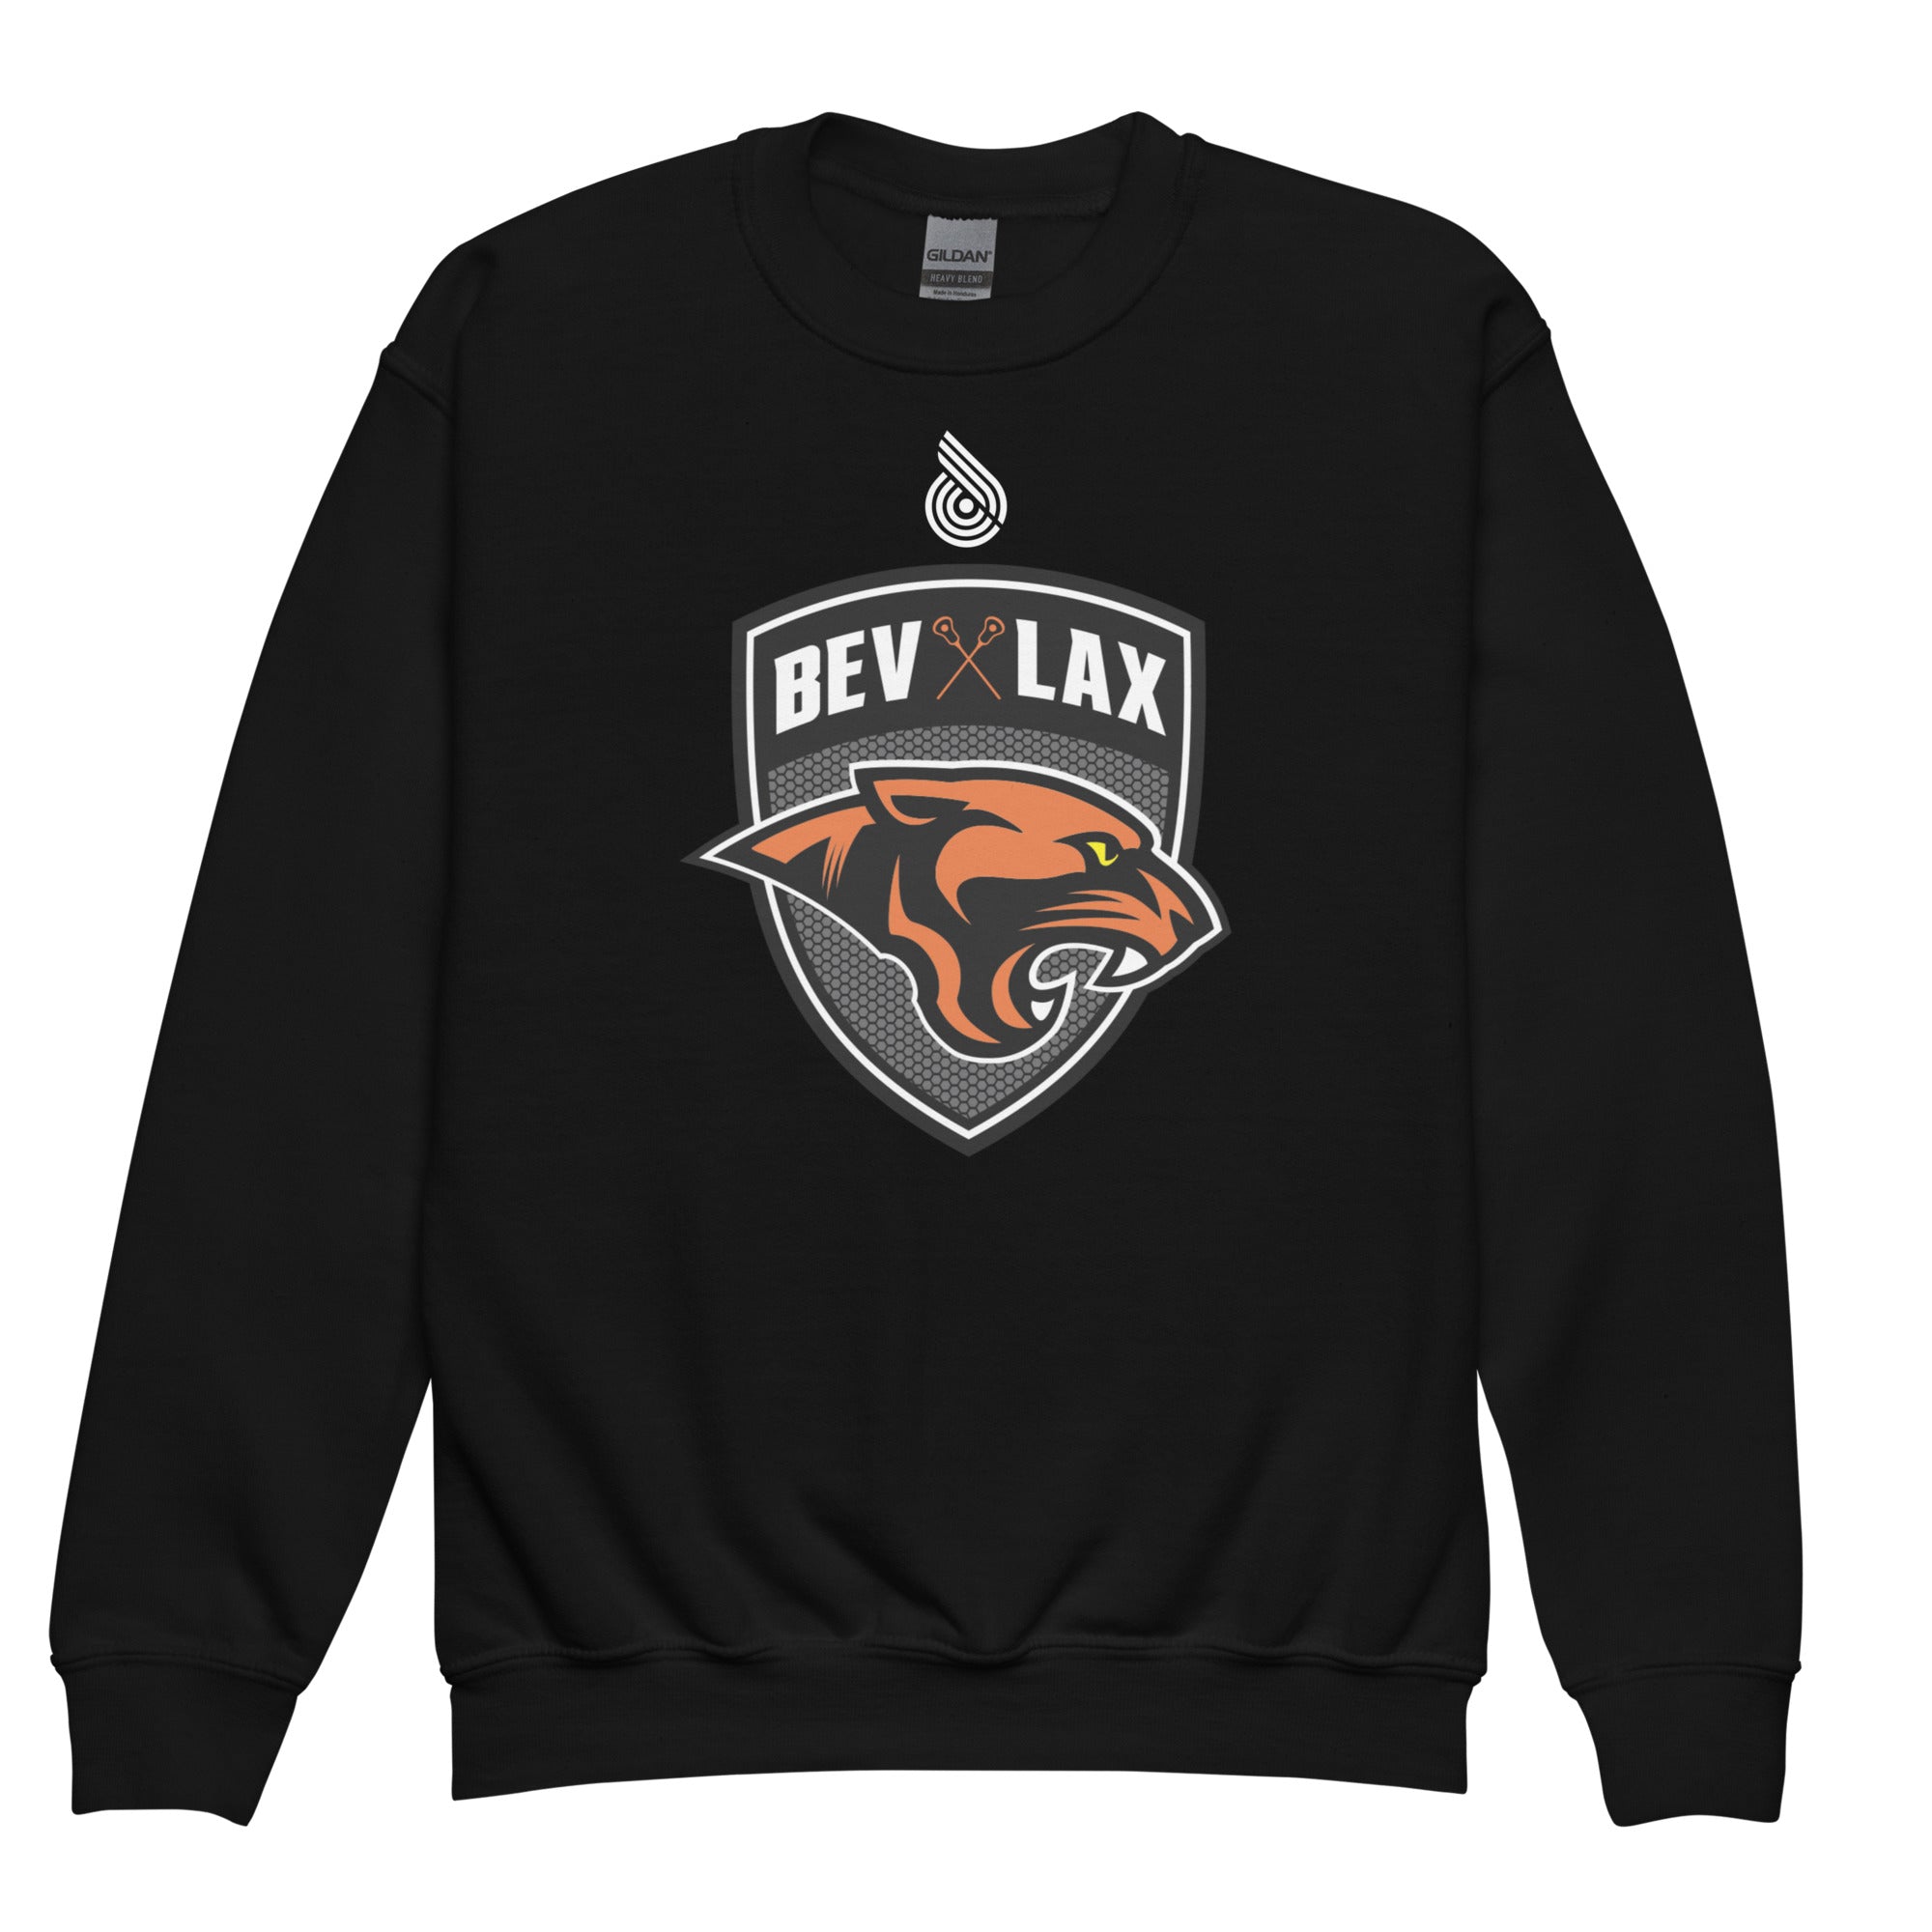 Beverly Youth crewneck sweatshirt